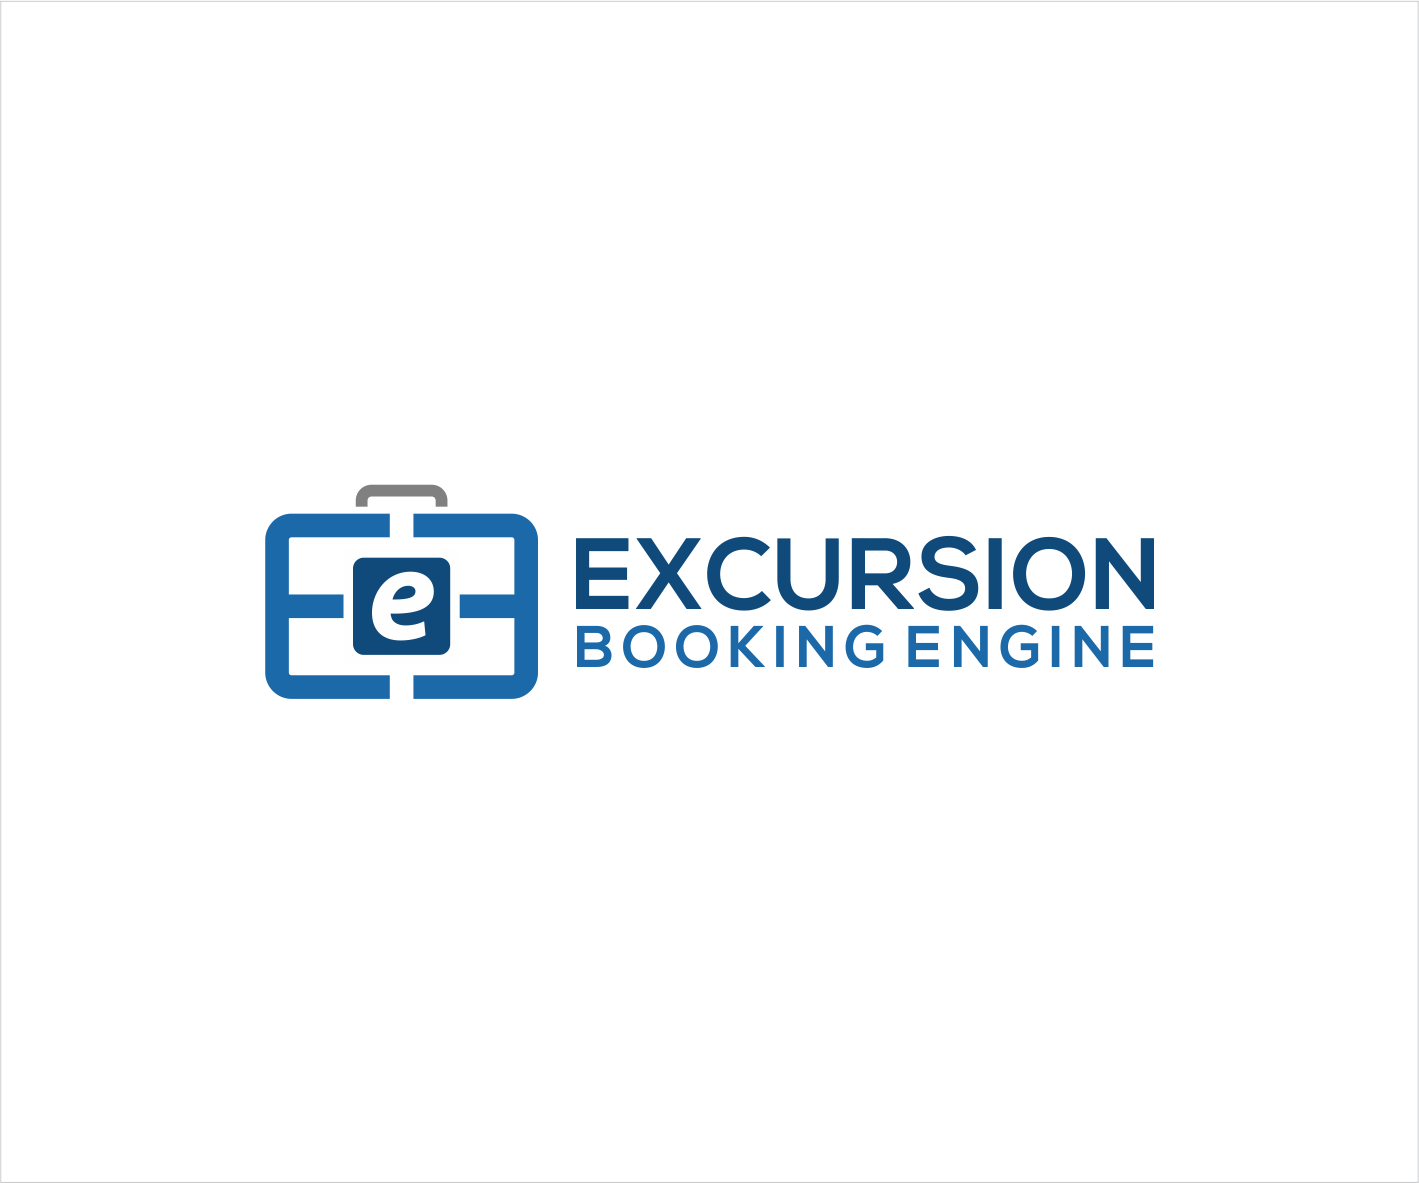 Excursion Logo - Elegant, Playful, Travel Logo Design for Excursion Booking Engine